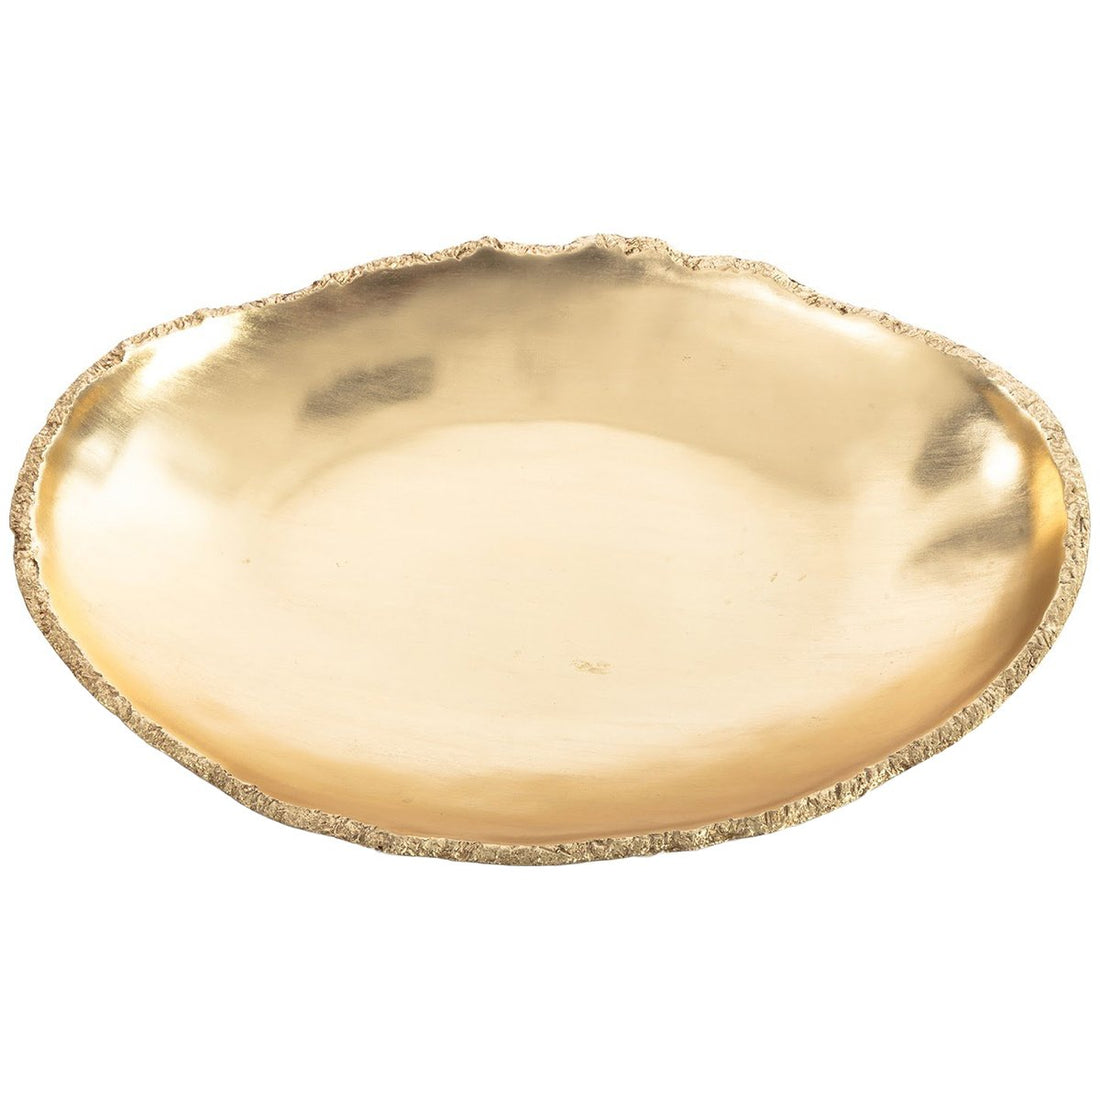 Phillips Collection Broken Egg Oblong Gold Bowl